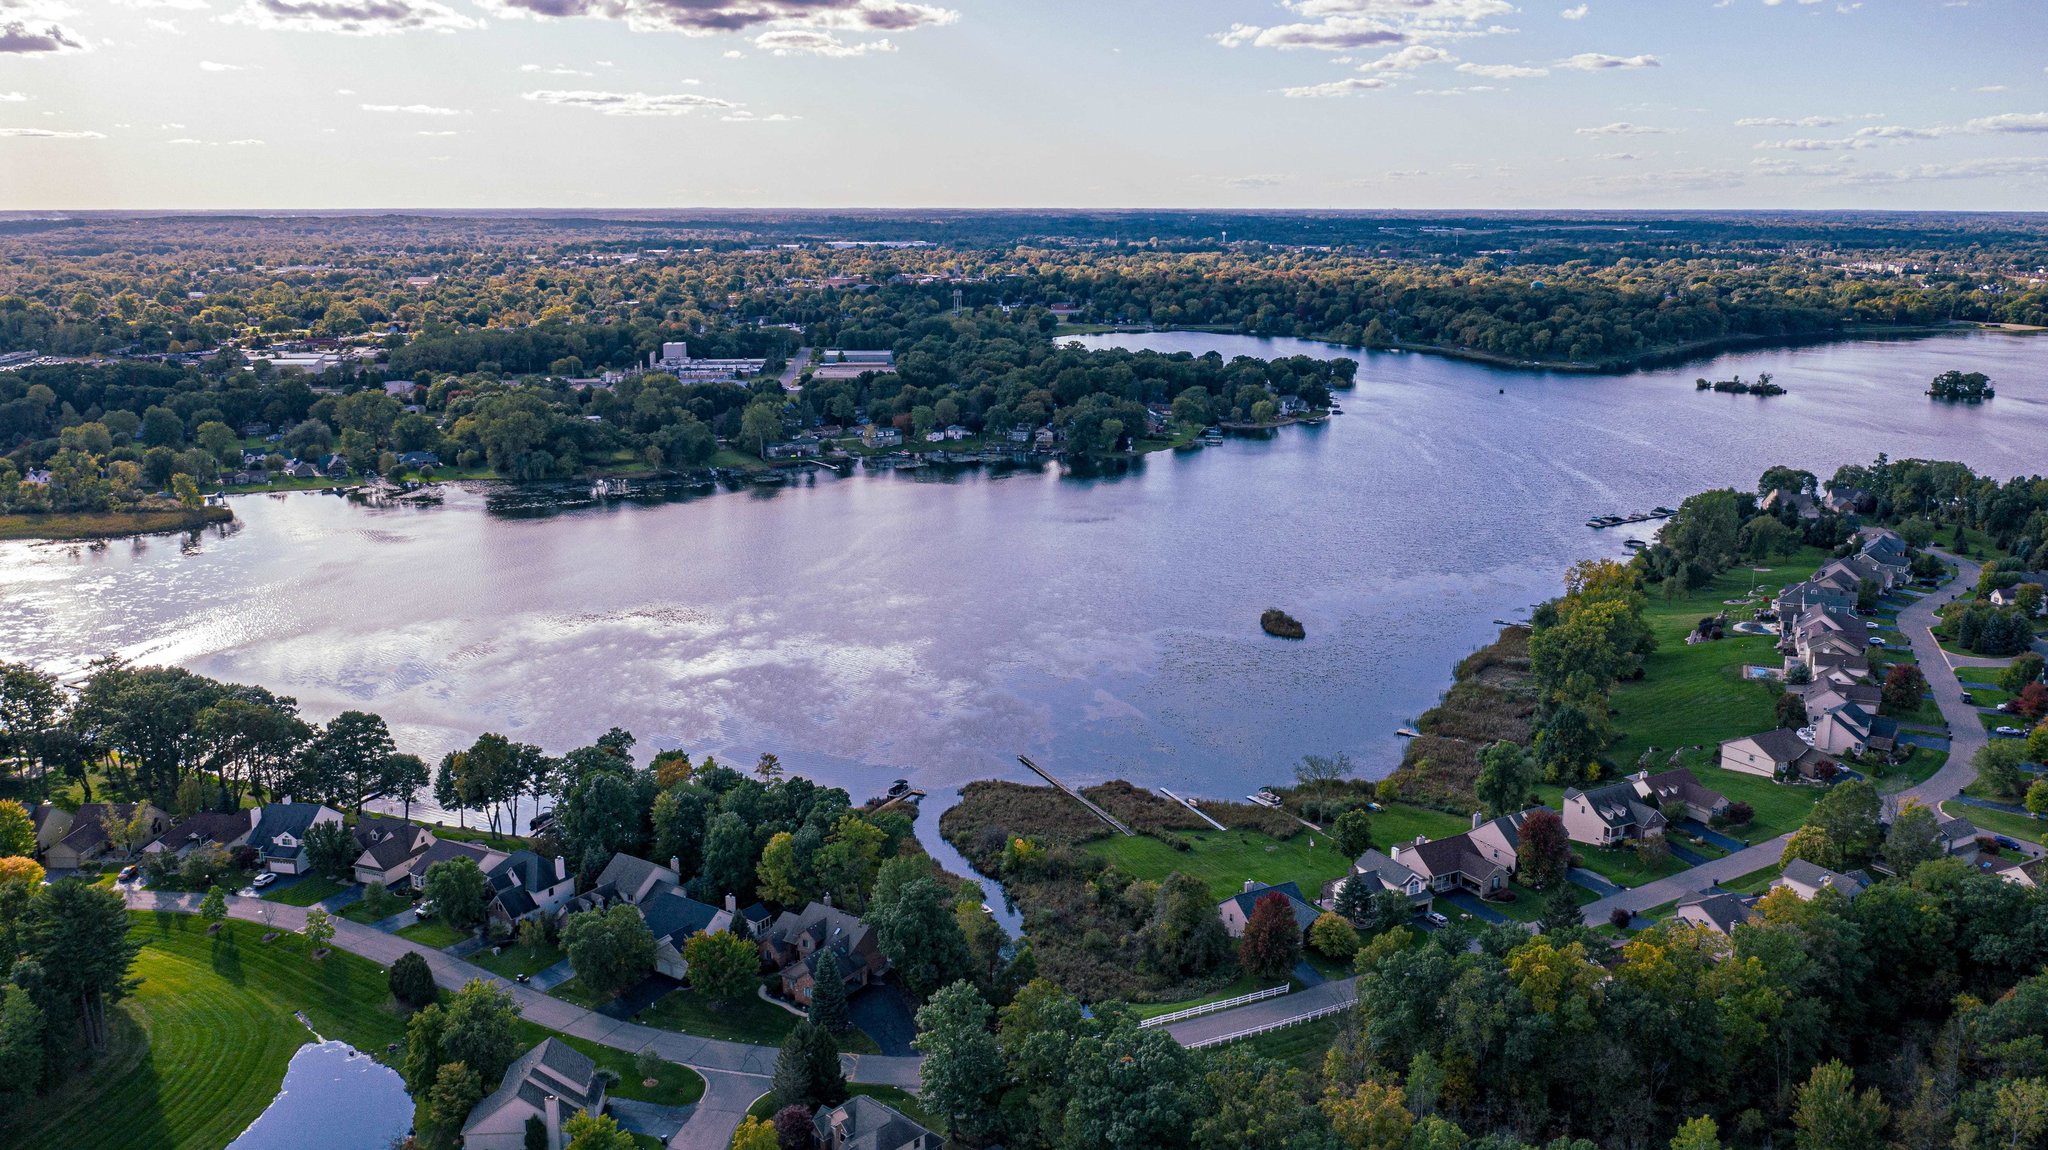 View of the Lakeshore Pointe neighborhood lake